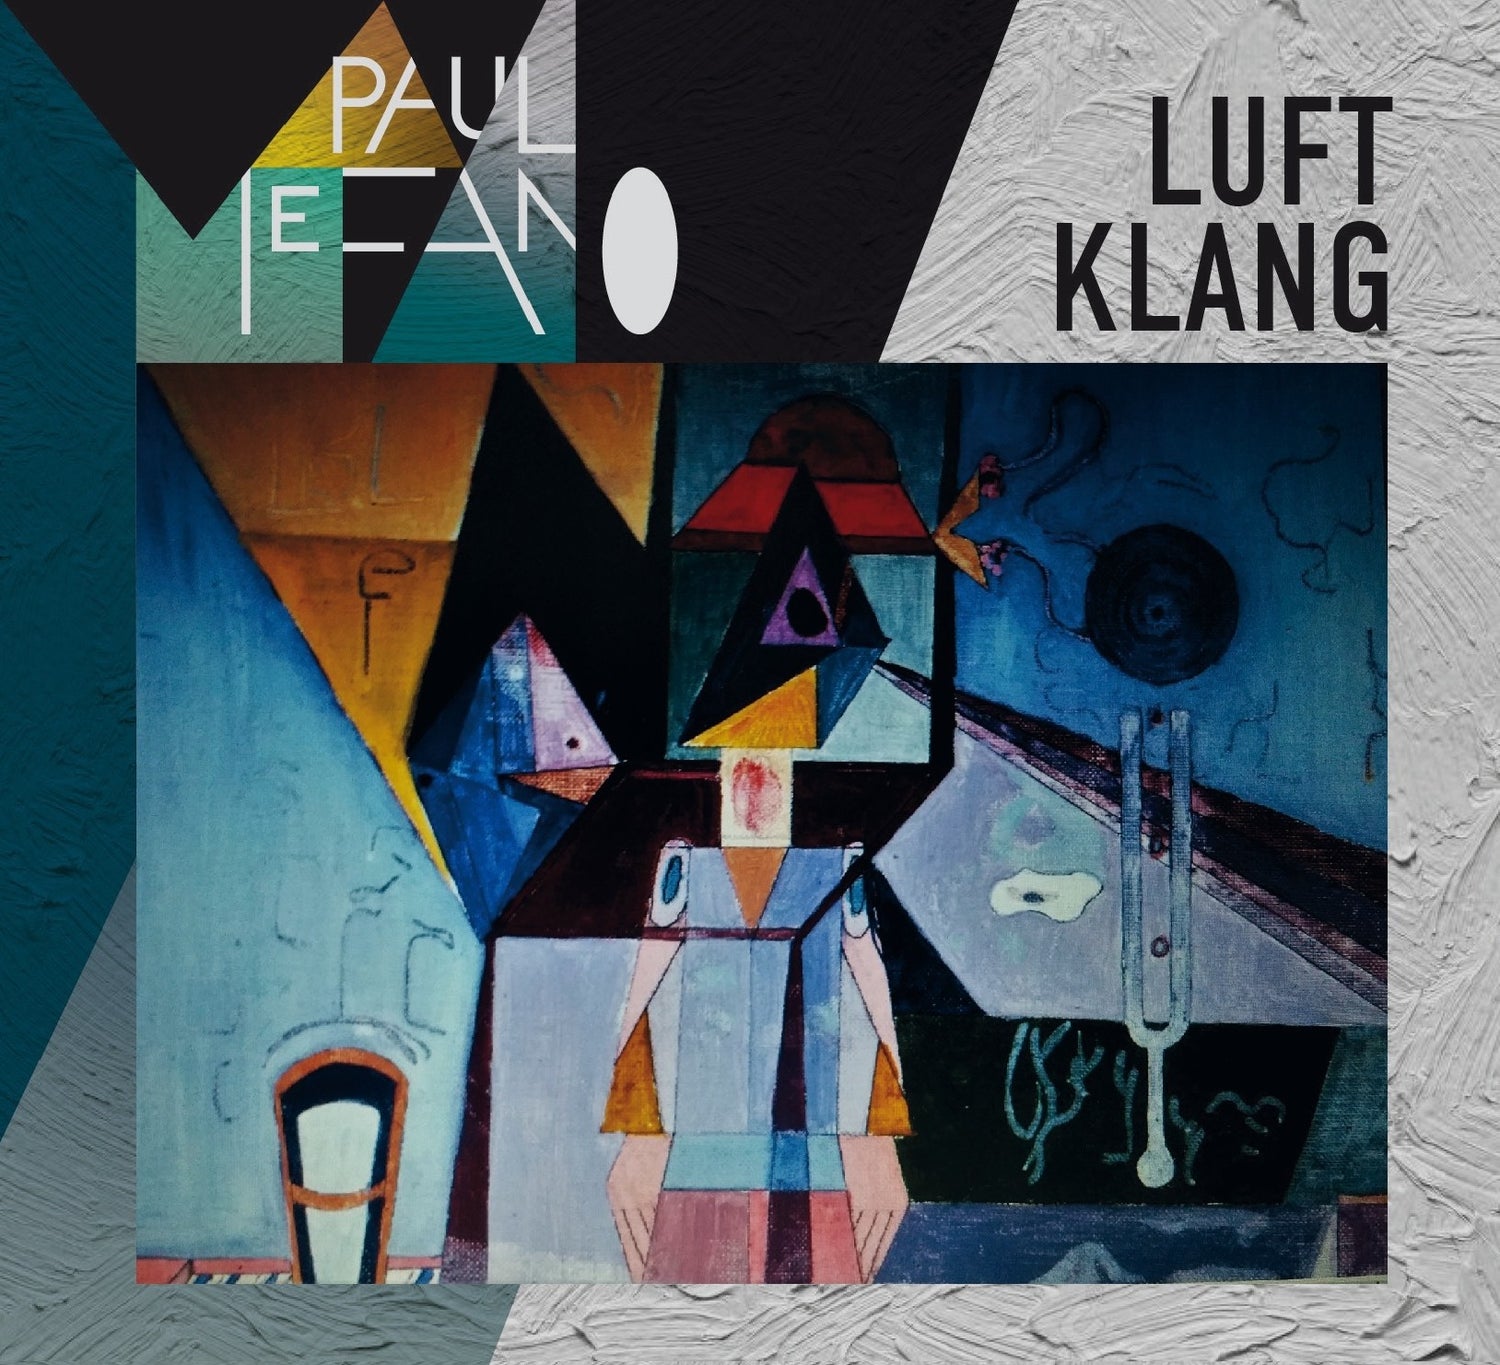 Pochette de : LUFTKLANG - PAUL MEFANO (CD)